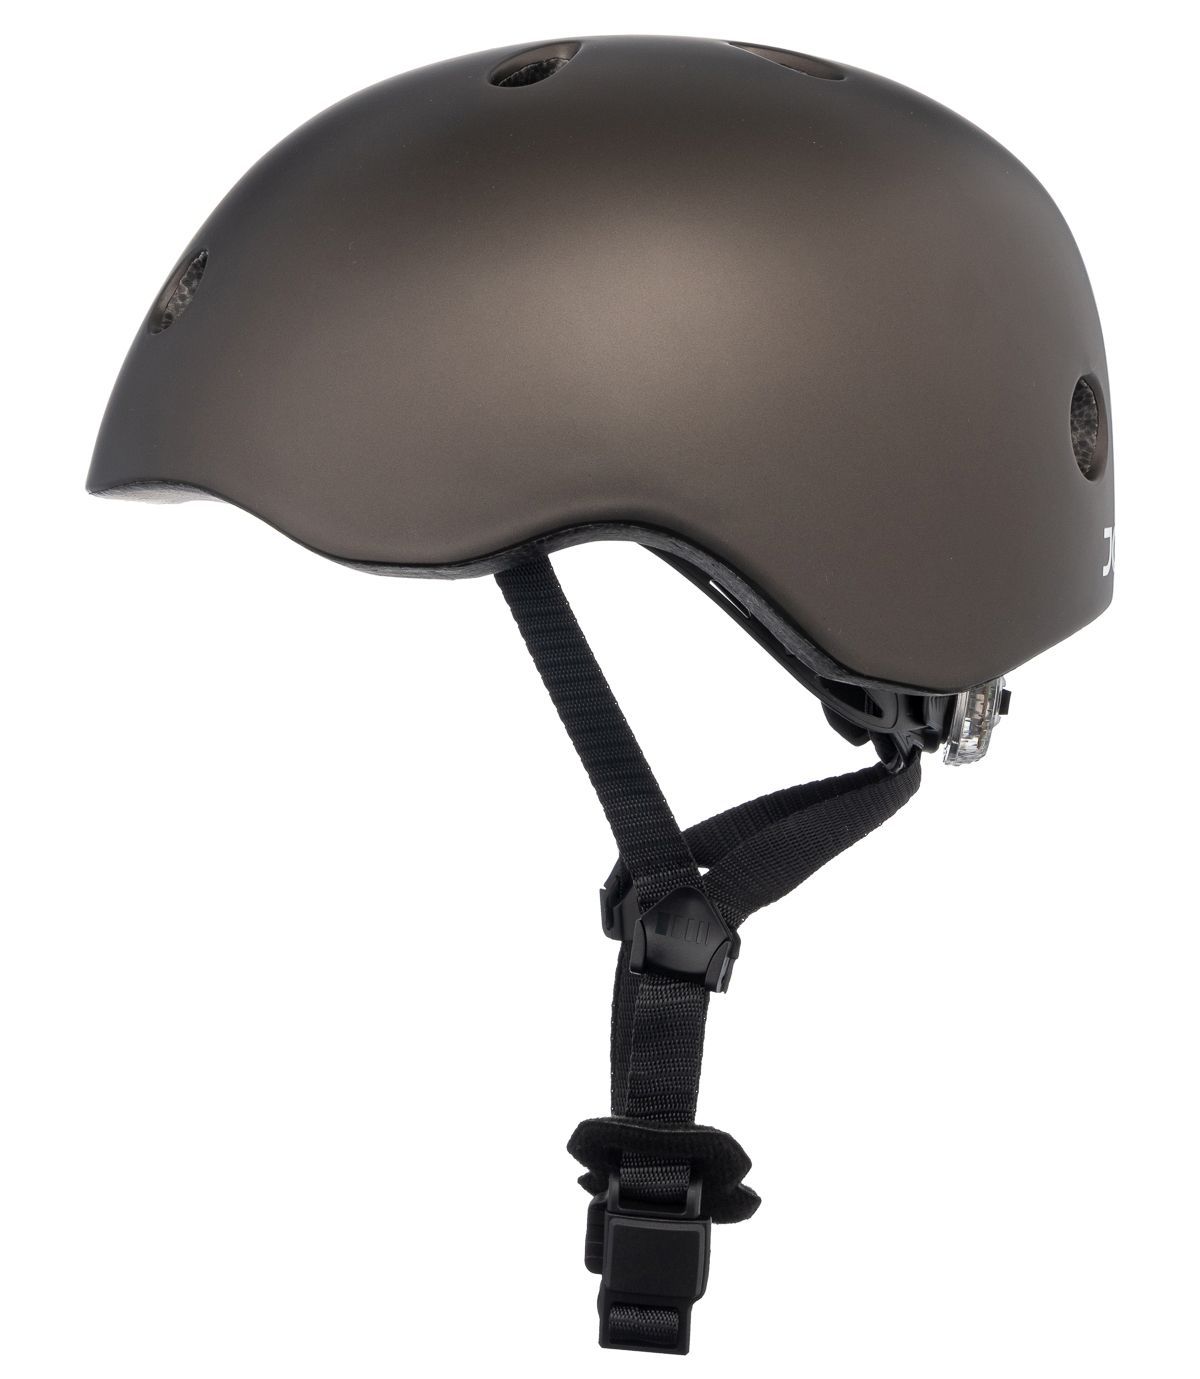 Шлем Jetcat Ride Black размер S 48-53см комплект защиты детский city ride шлем размер универсальный jb0211561